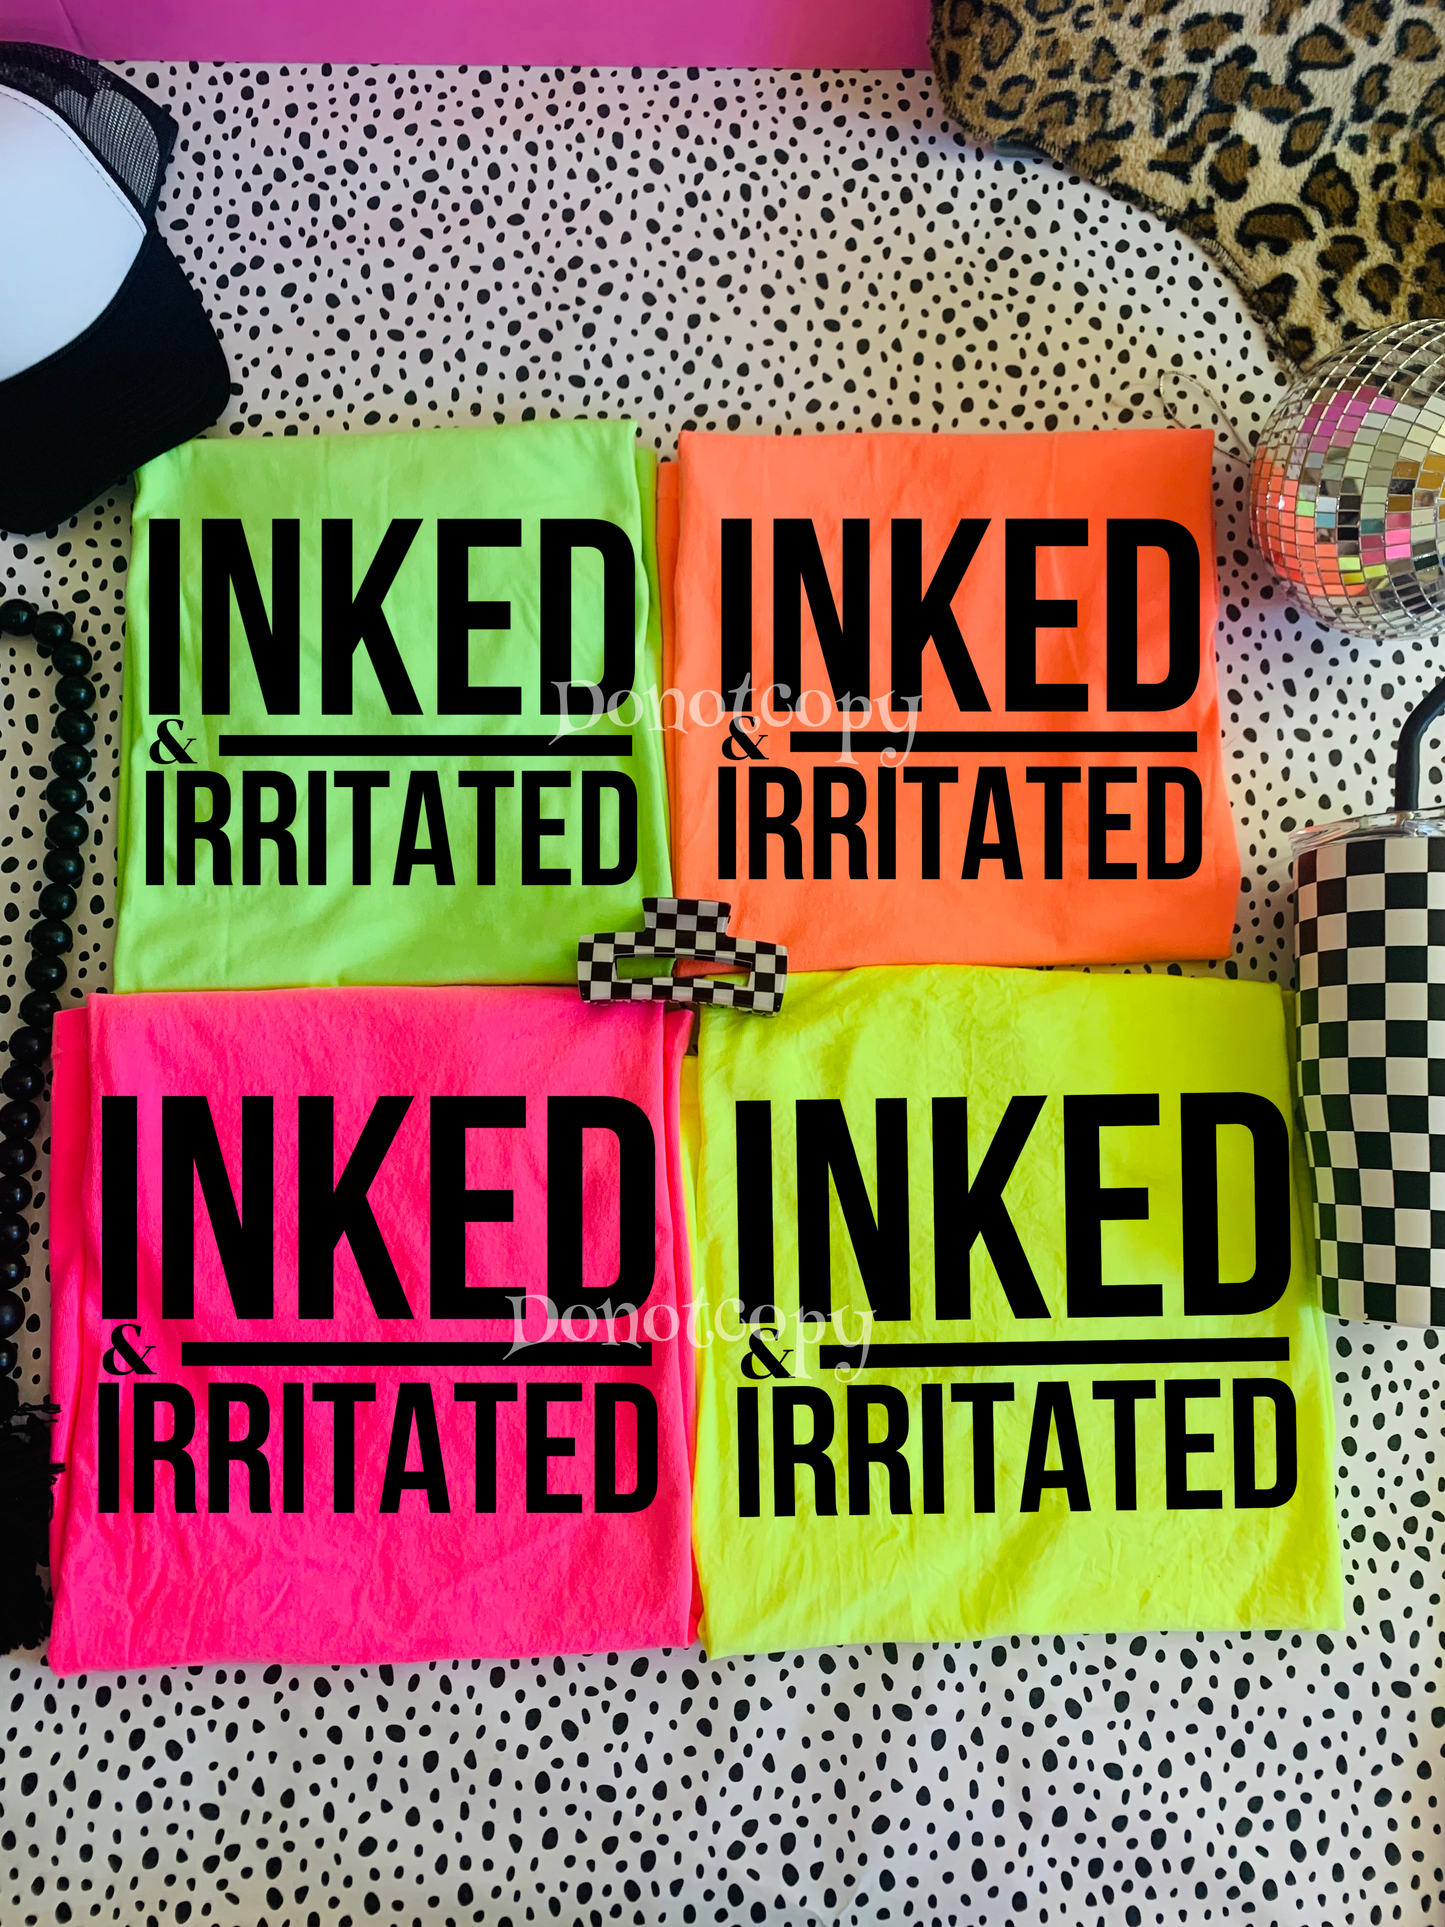 Inked & irritated 💚